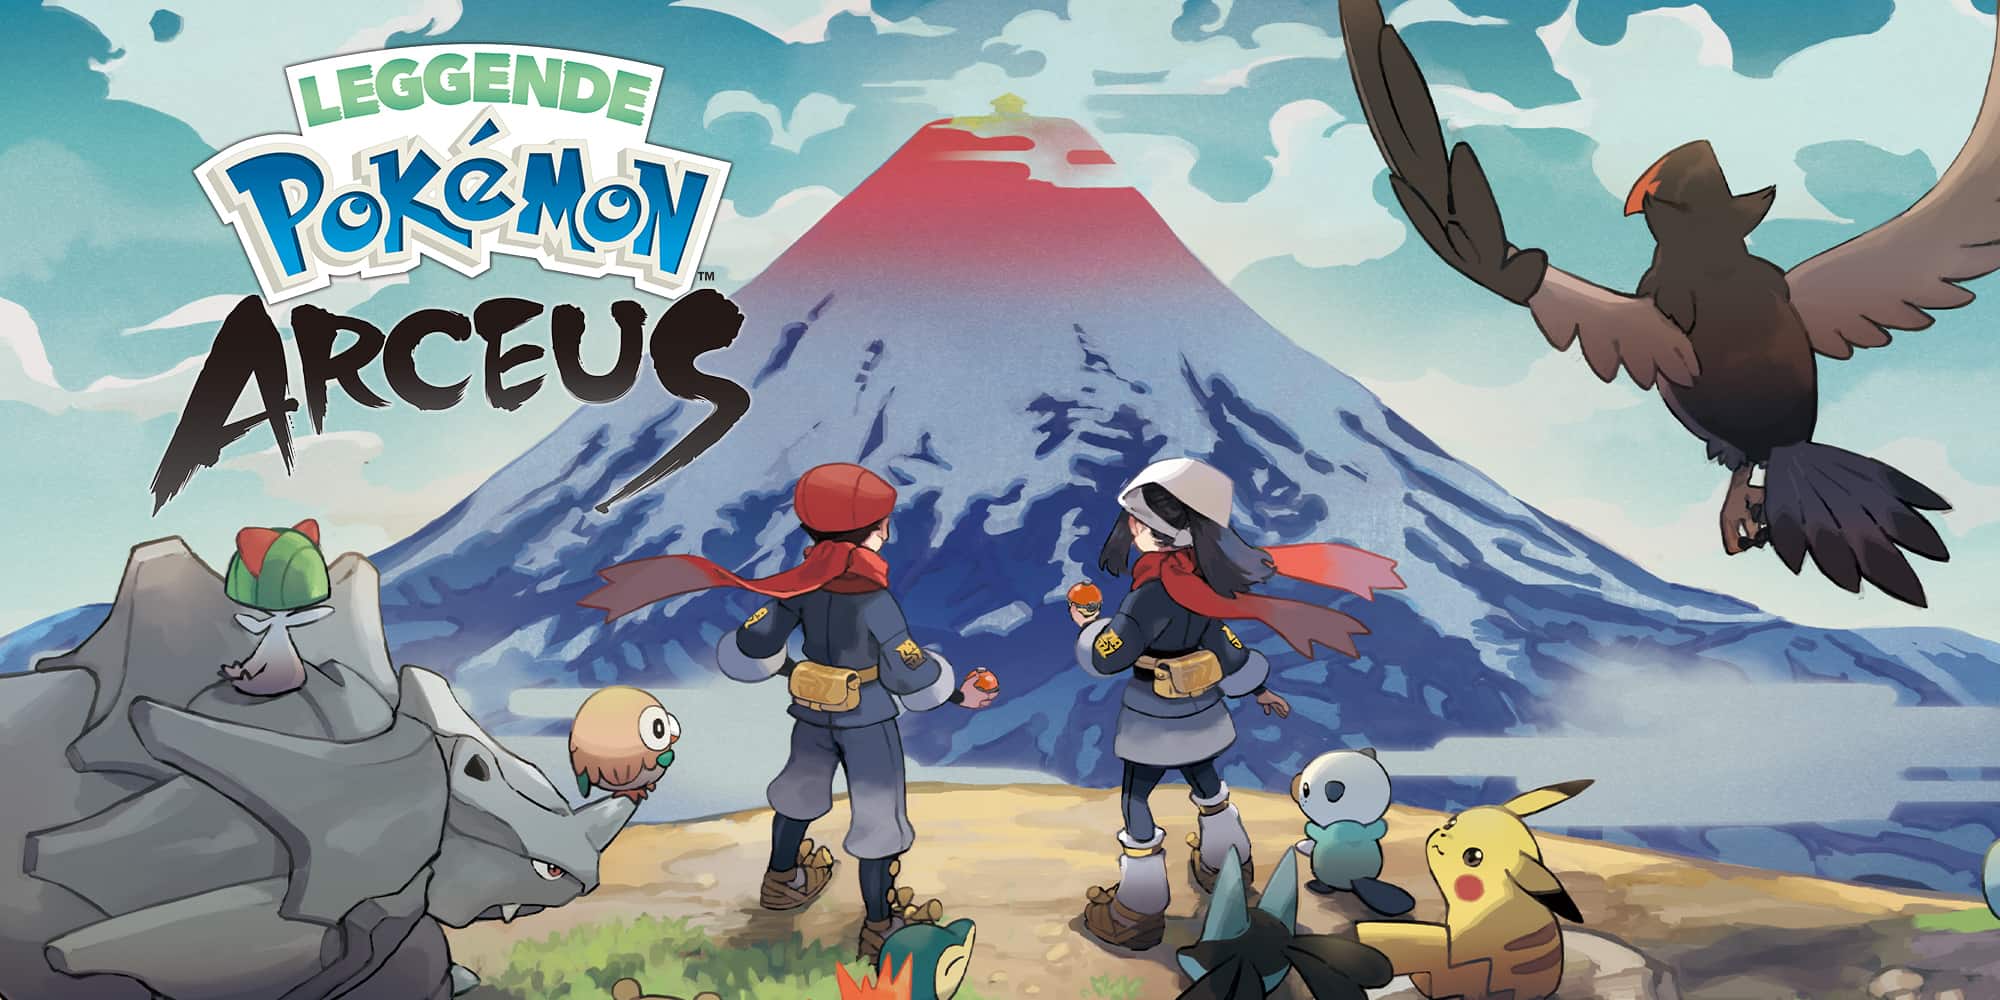 Leggende Pokémon: Arceus – Primi dati di vendita